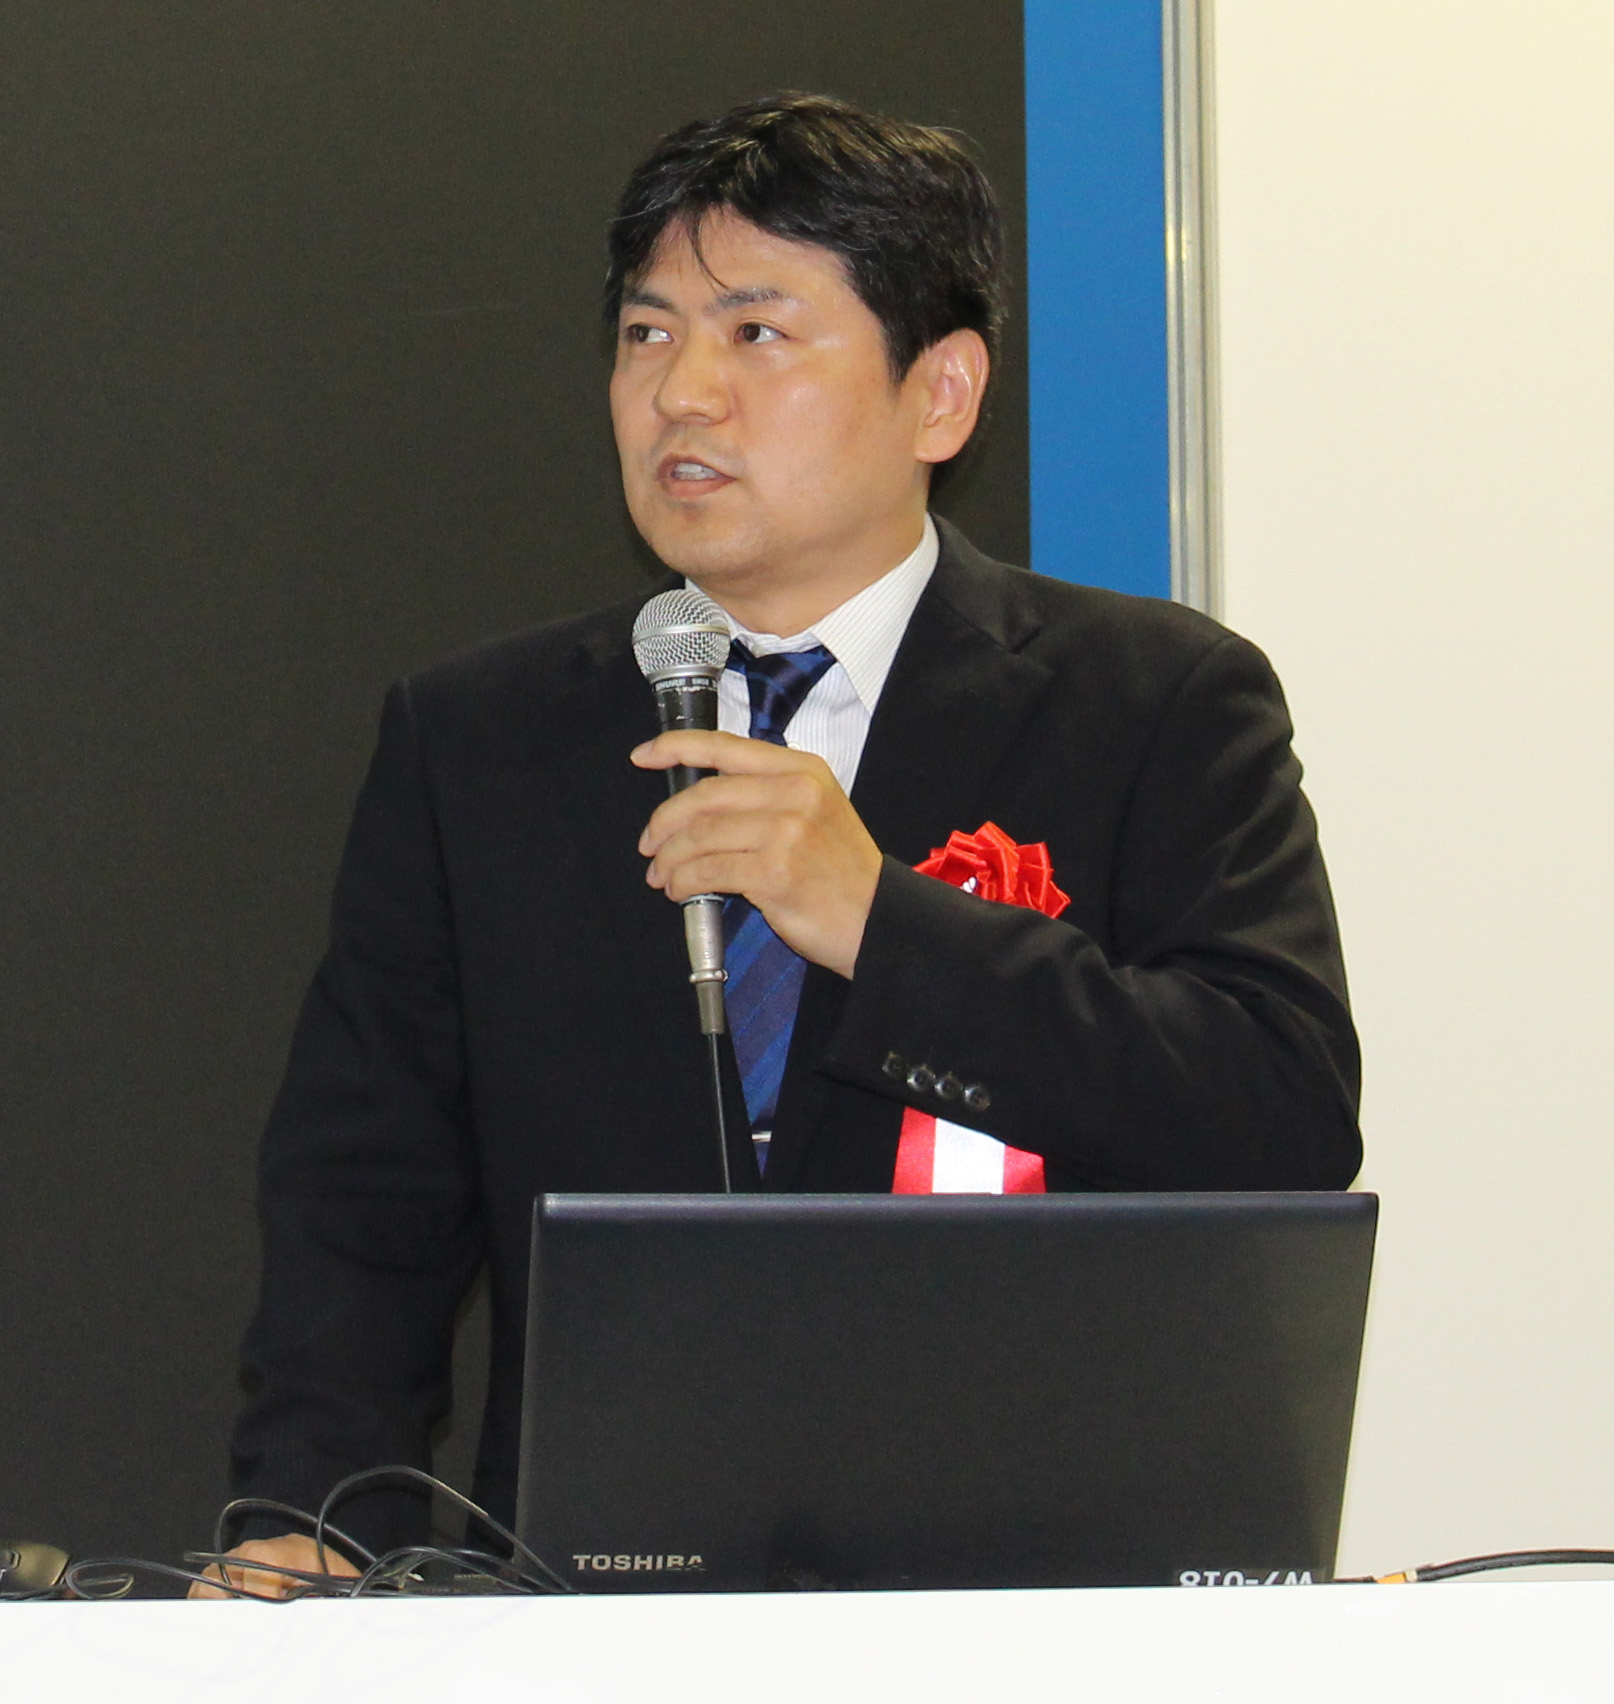 Presentation by manager Makoto Yada